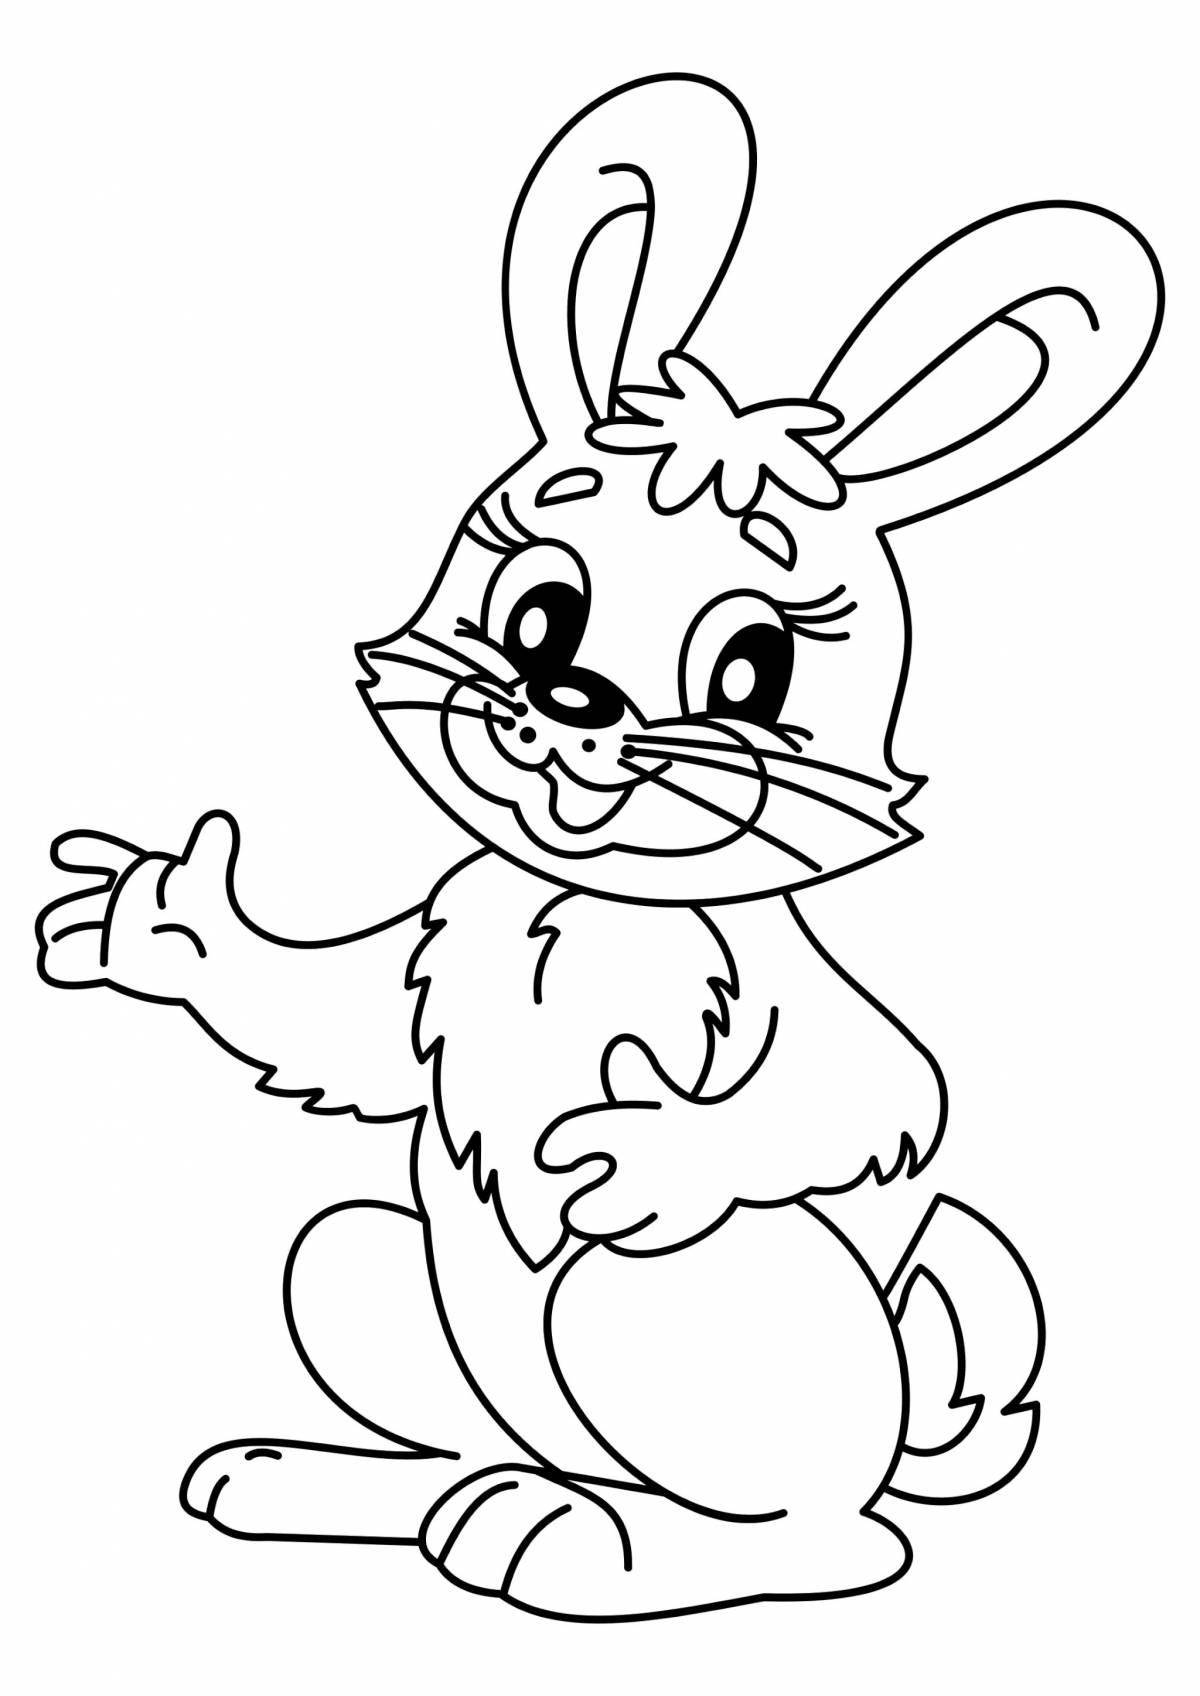 Joyful coloring cartoon rabbit